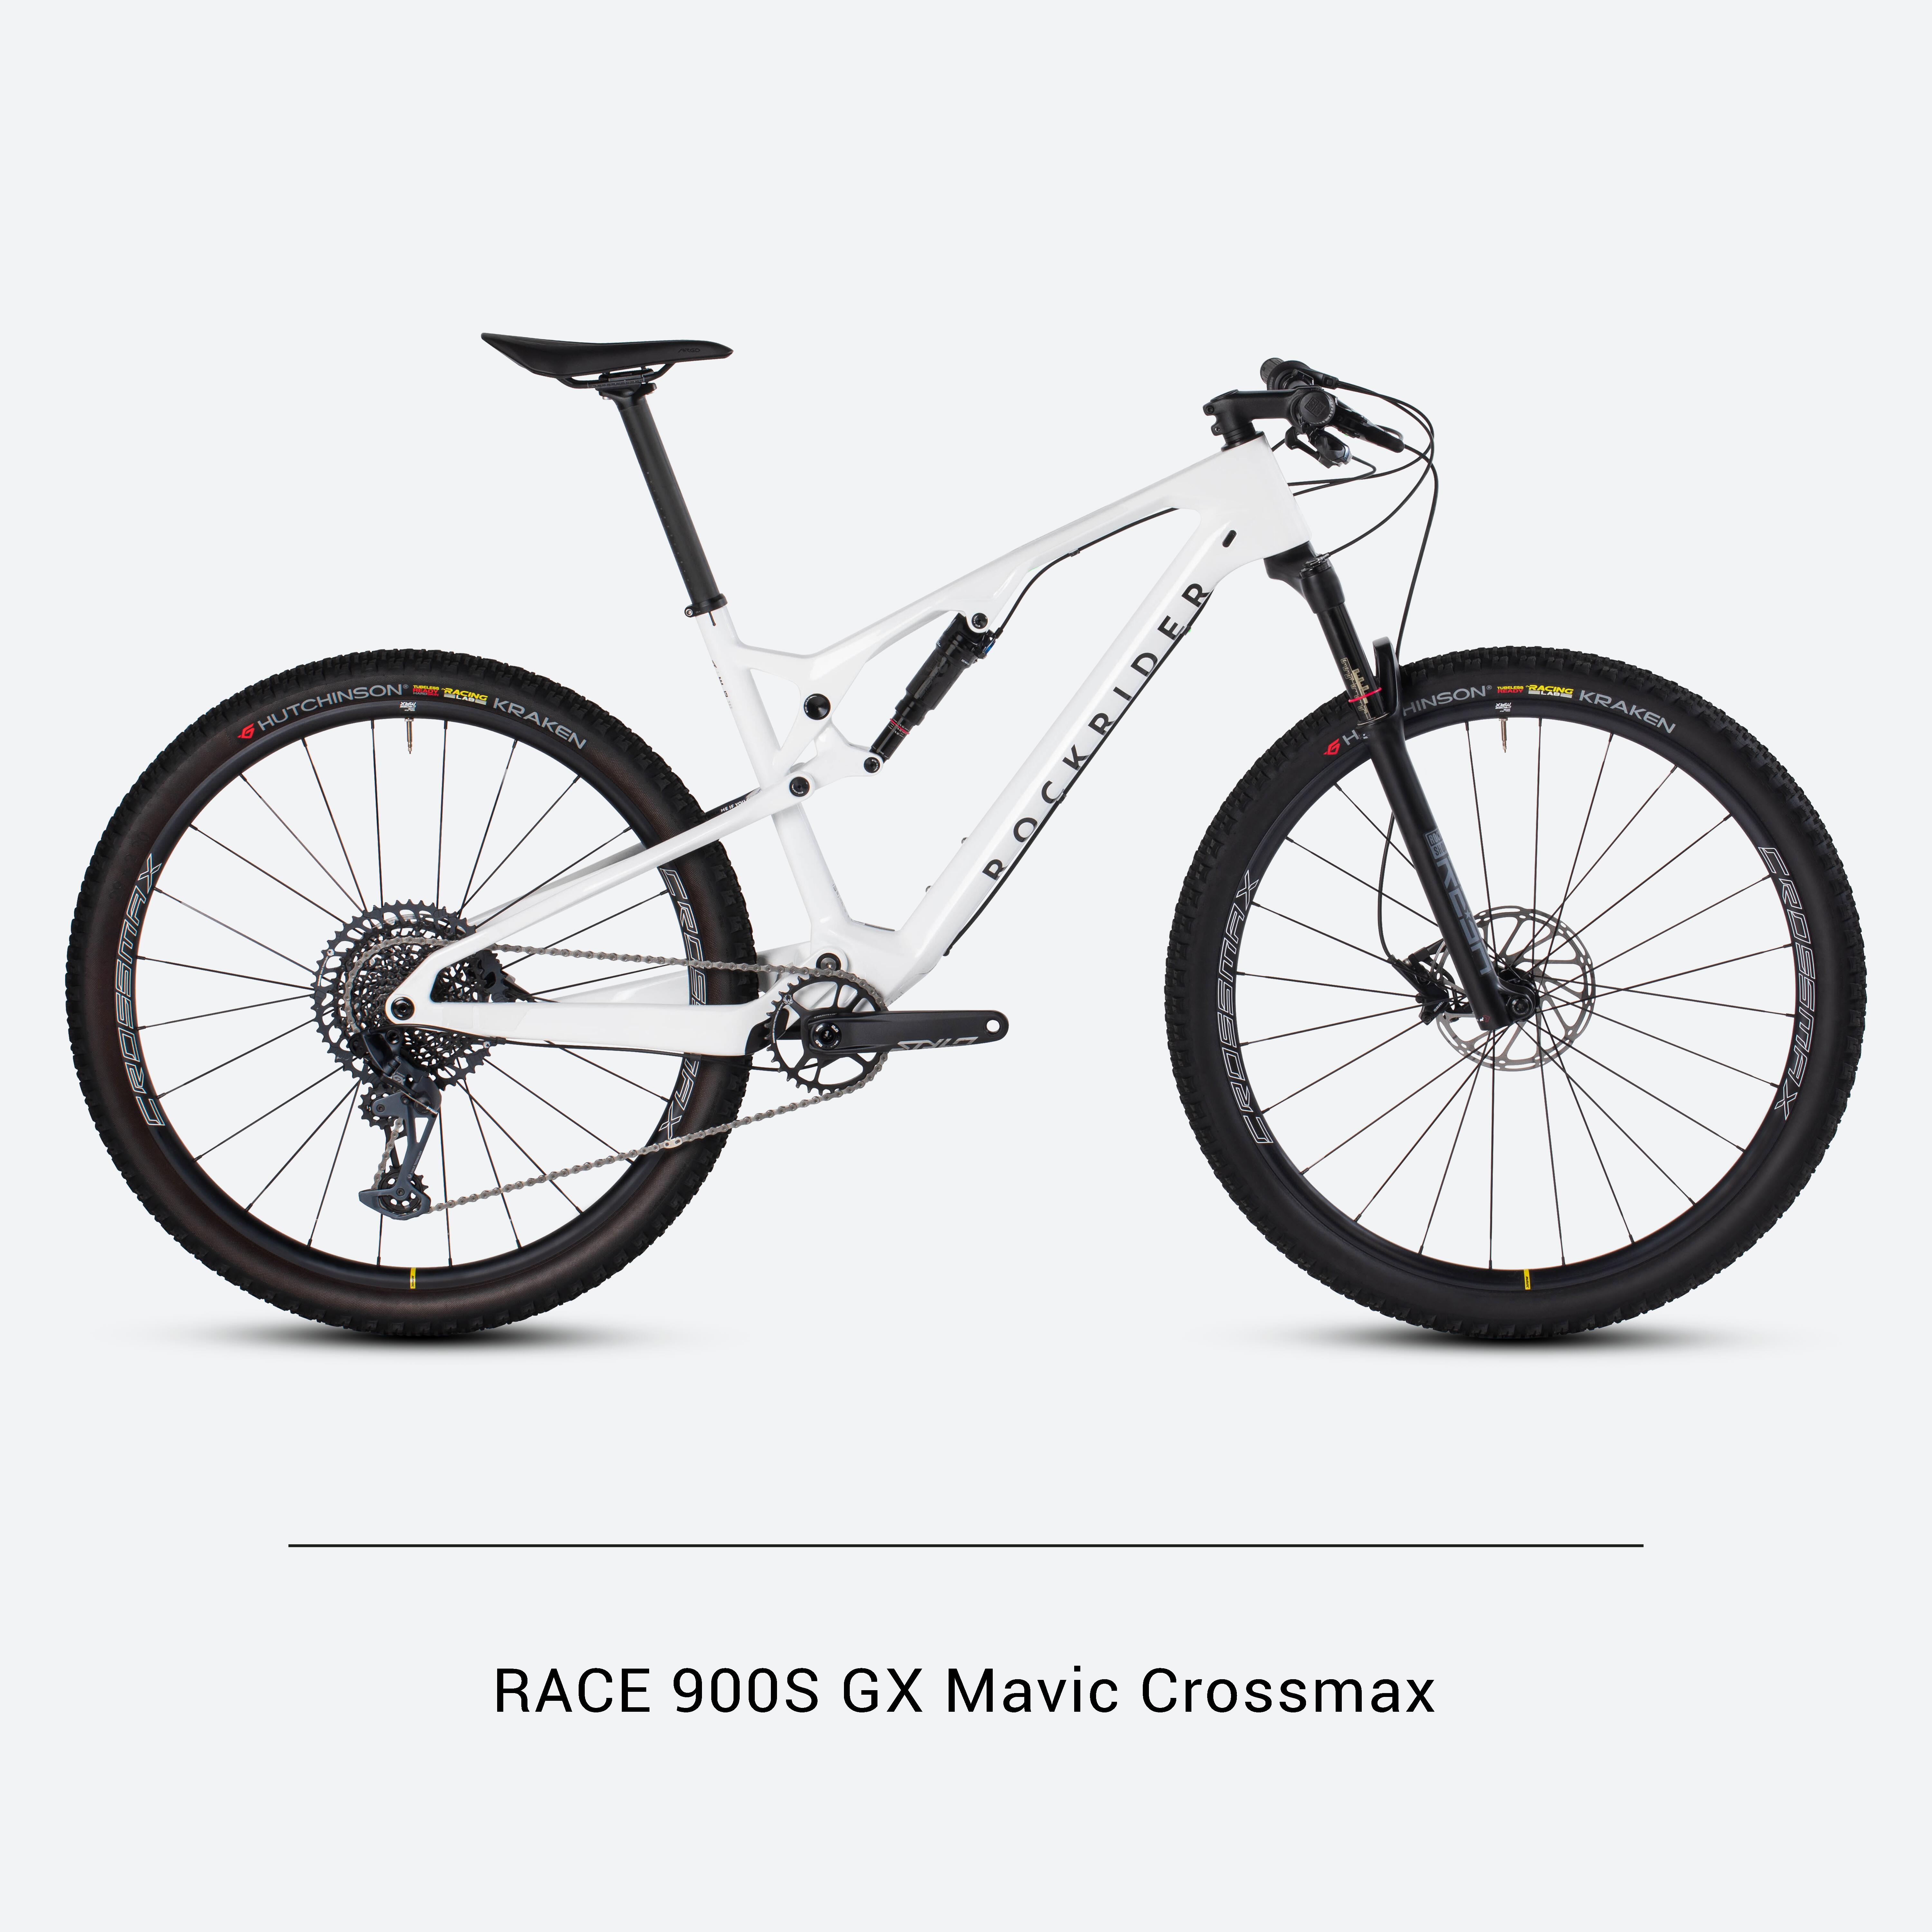 Bicicletă MTB cross country RACE 900S GX Eagle, roți Mavic Crossmax, cadru carbon La Oferta Online decathlon imagine La Oferta Online